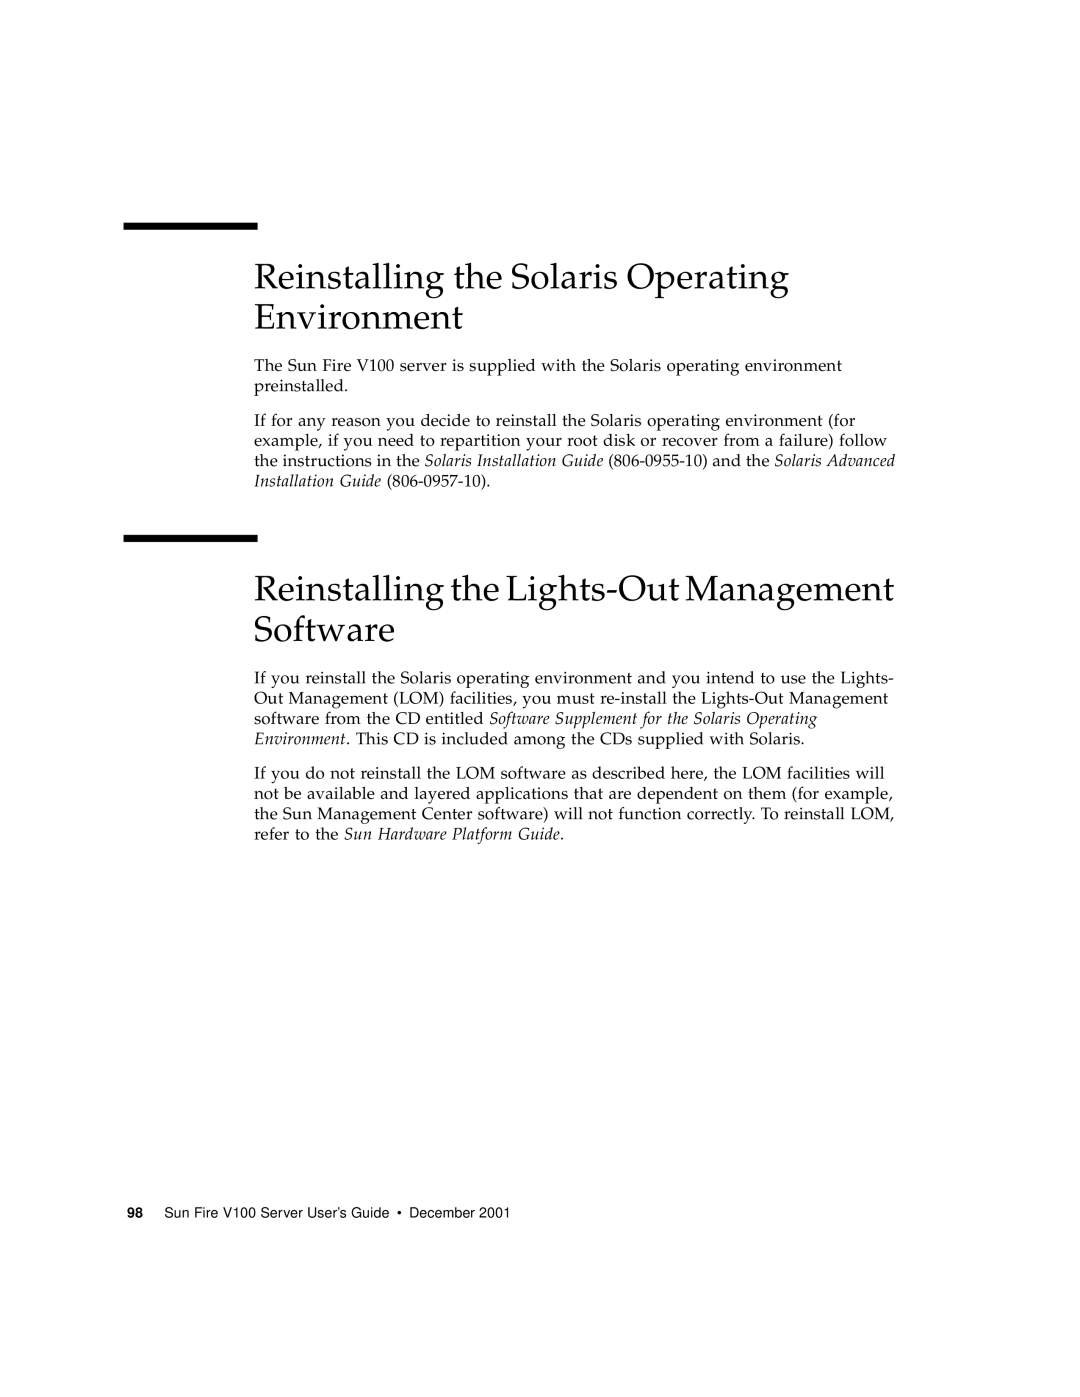 Sun Microsystems manual Reinstalling the Solaris Operating Environment, Sun Fire V100 Server User’s Guide December 